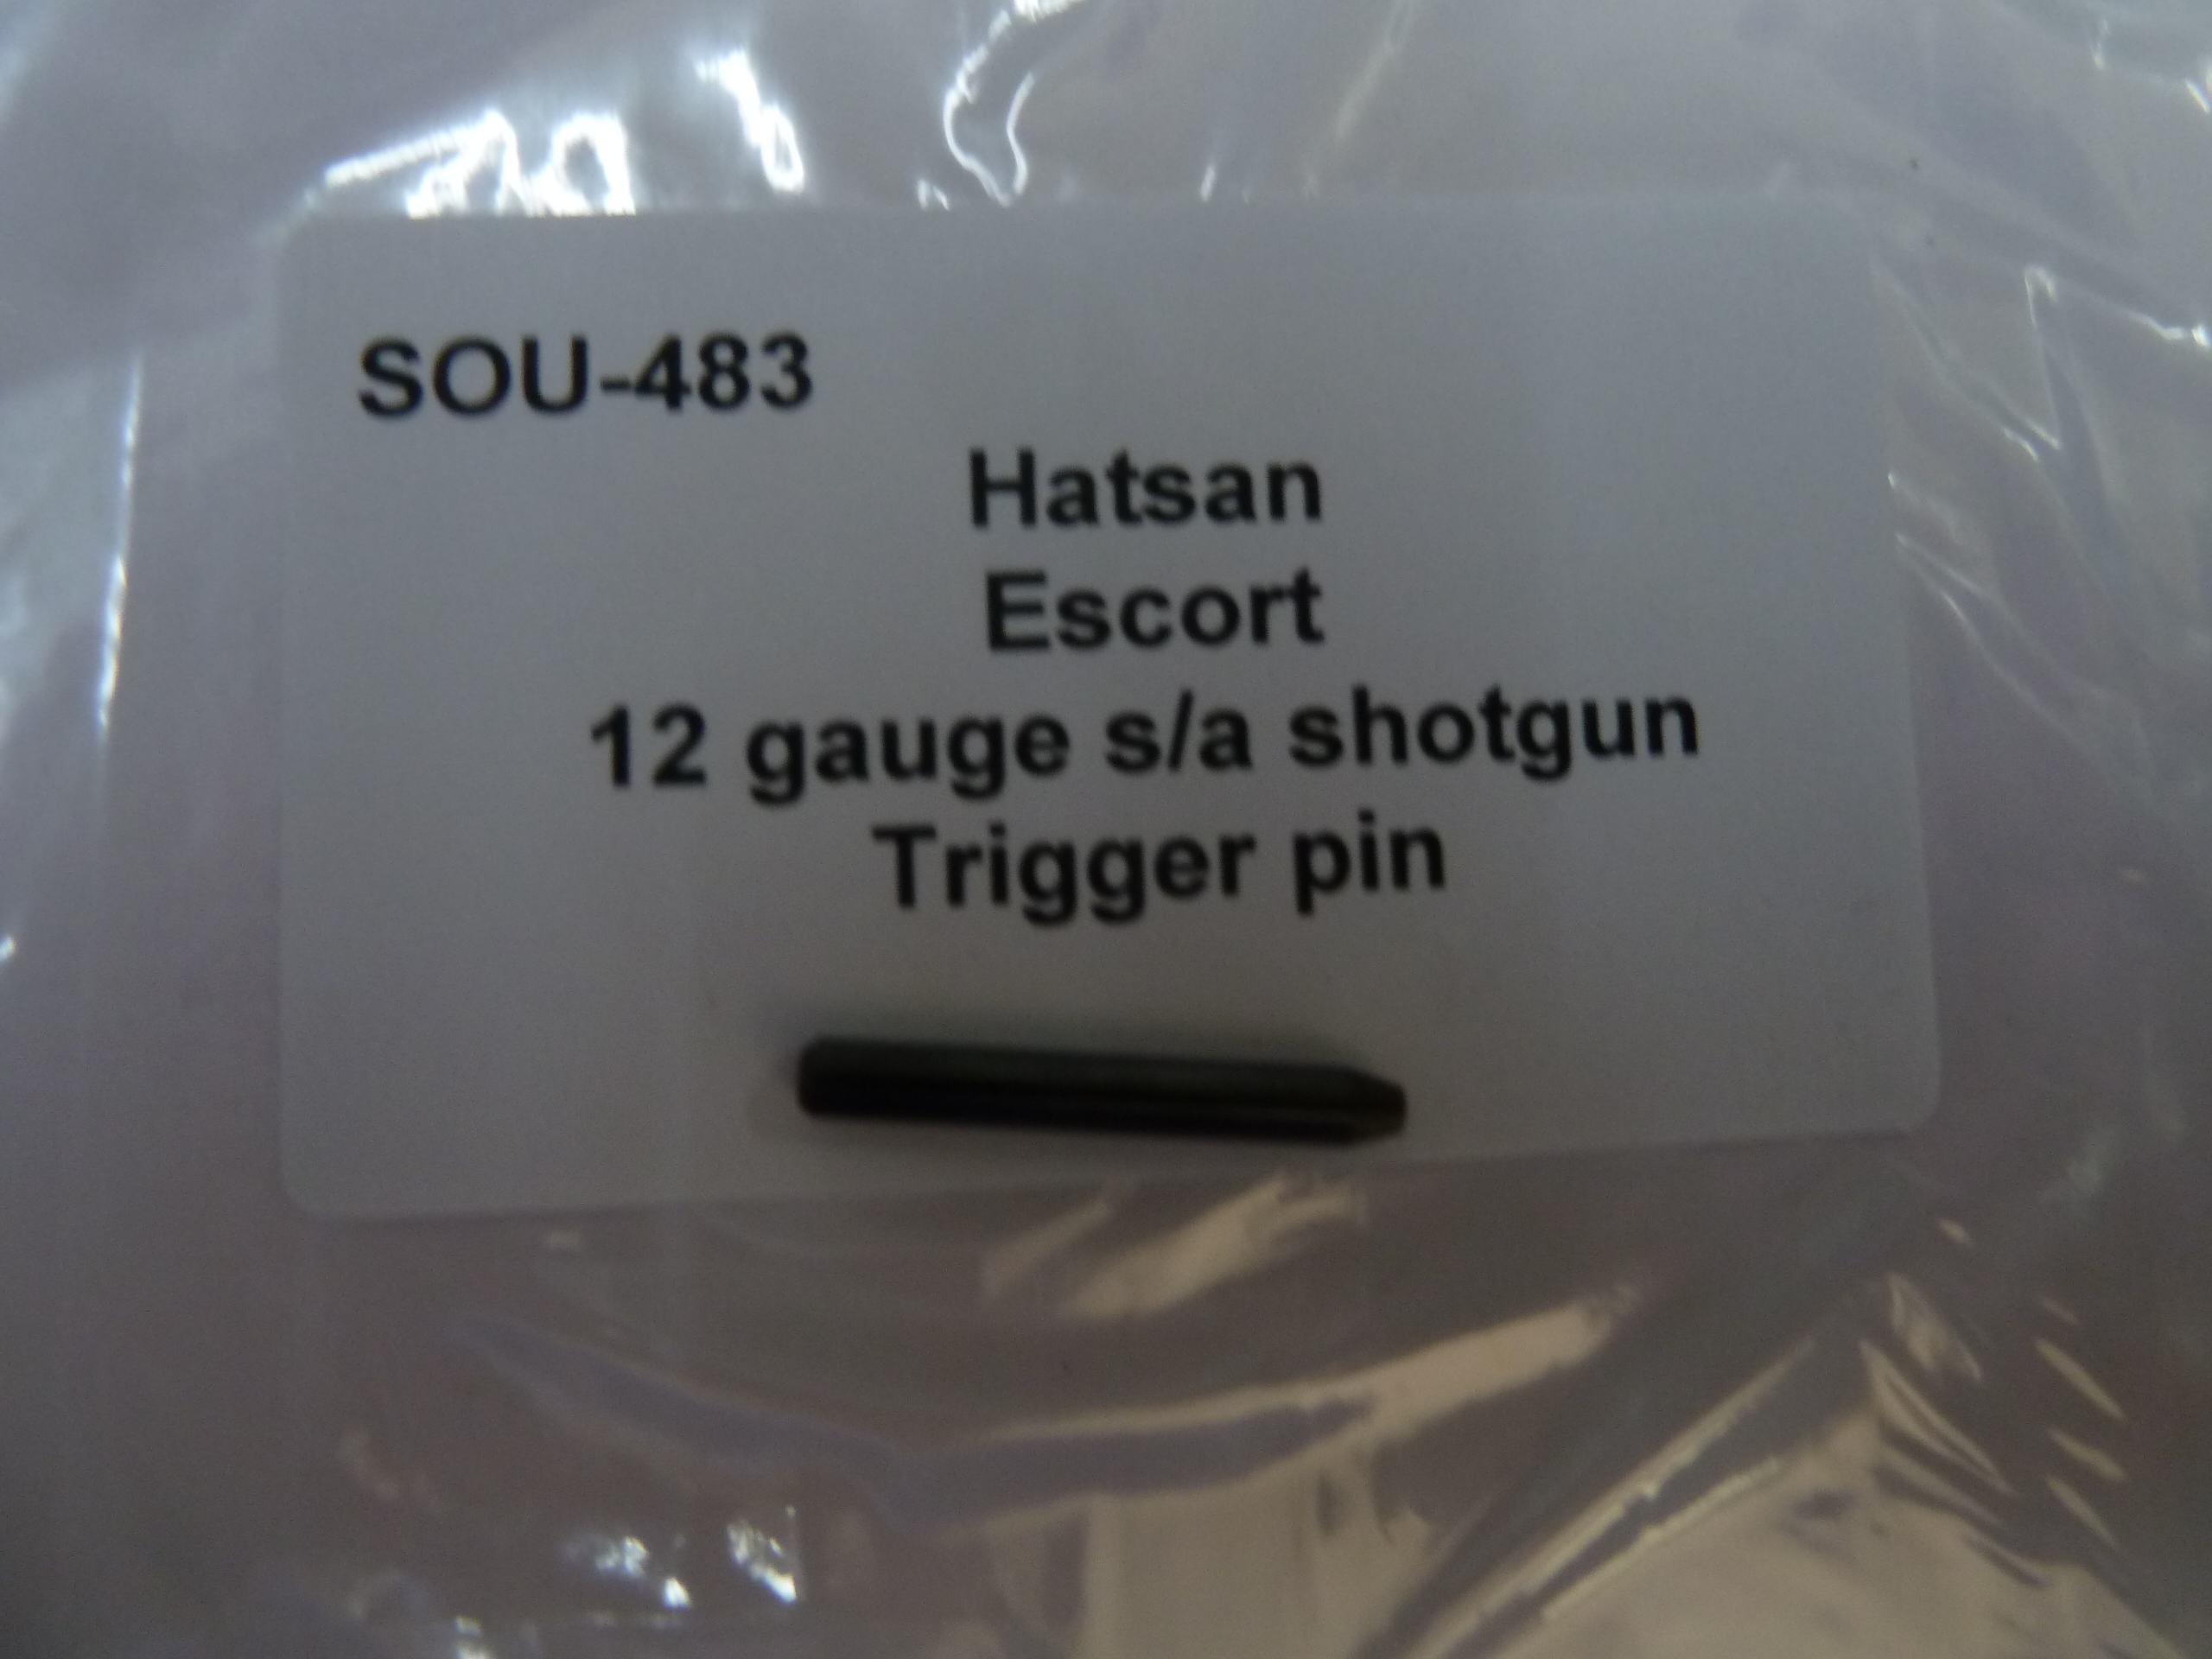 Hatsan Escort 12 gauge trigger pin